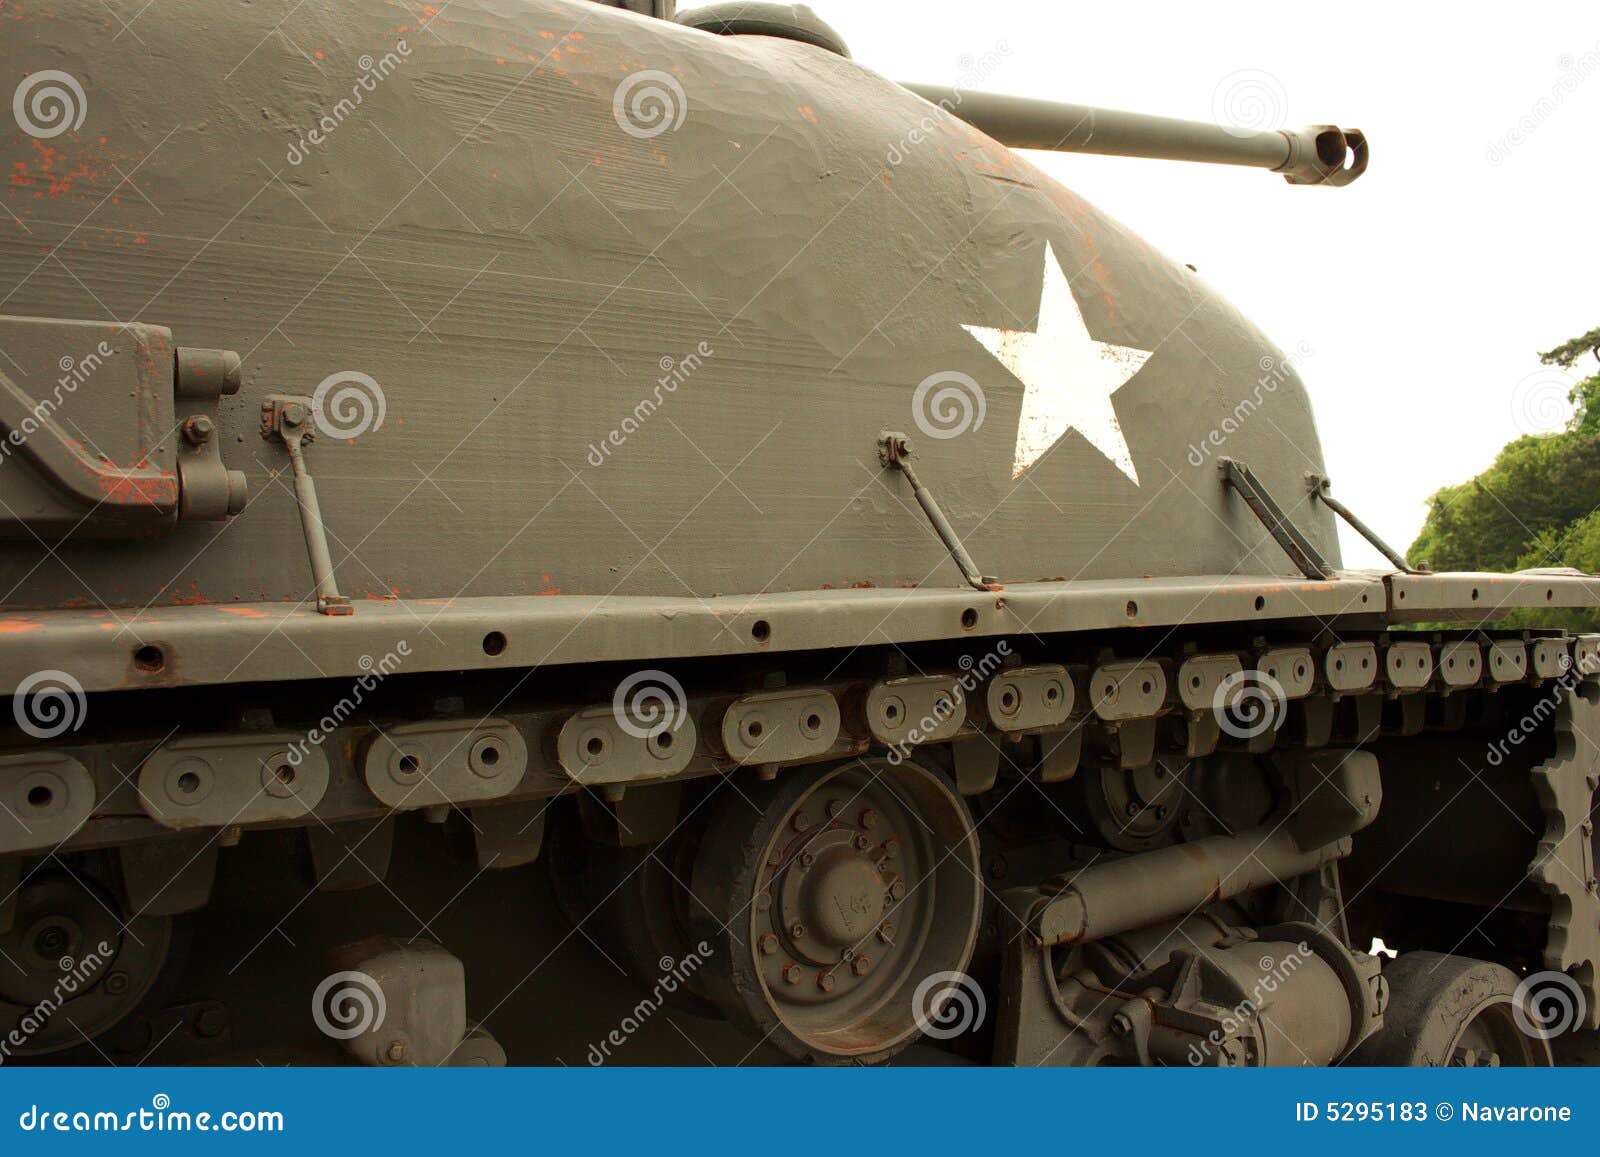 890 Tank Sherman Stock Photos - Free & Royalty-Free Stock Photos from  Dreamstime